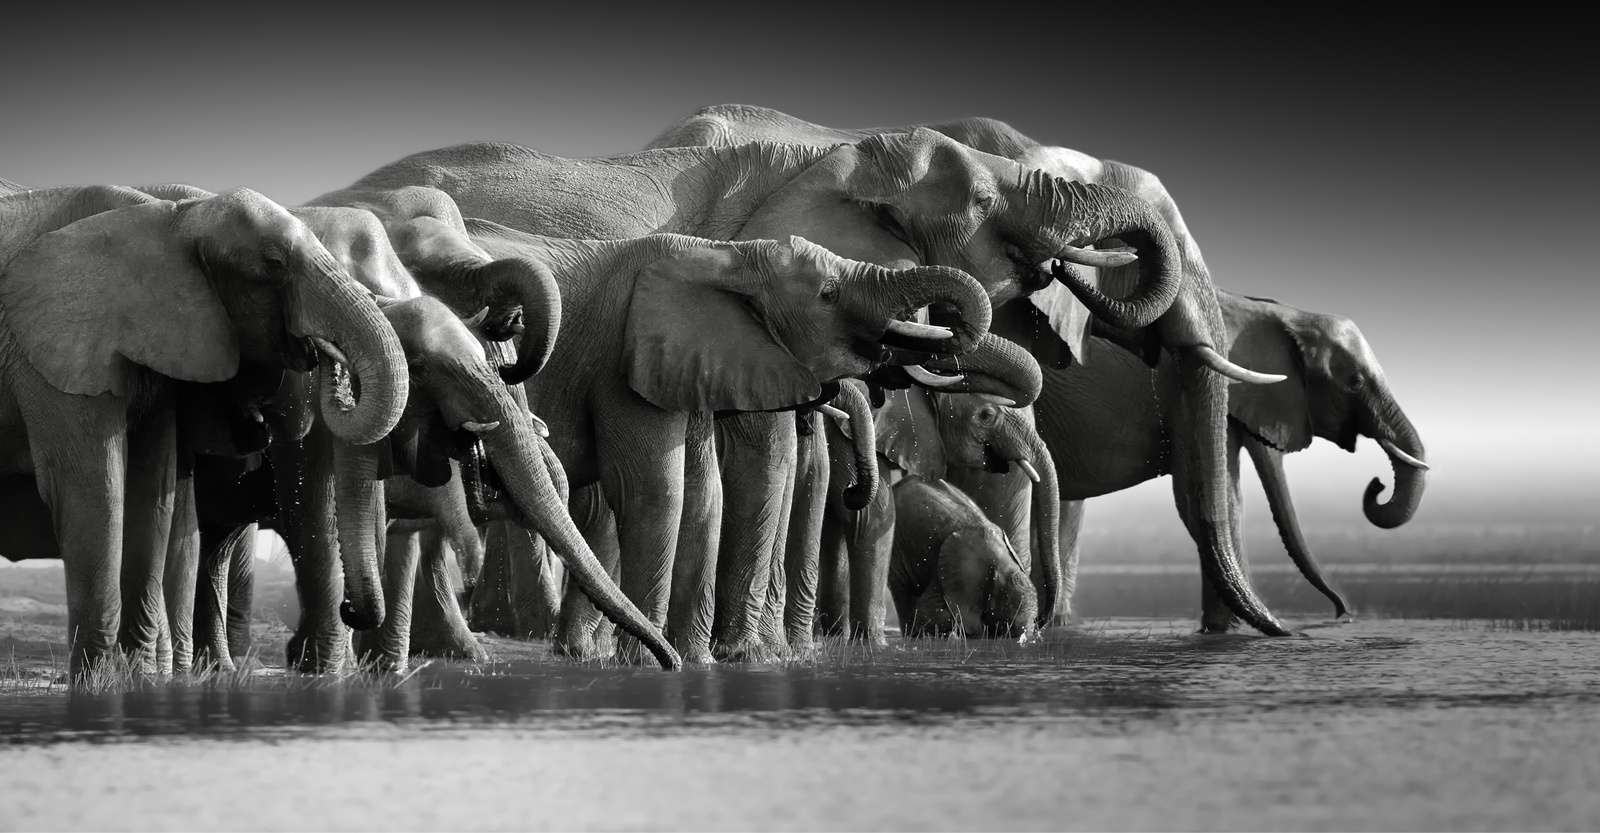 Elephants, Chobe River, Chobe National Park, Botswana.